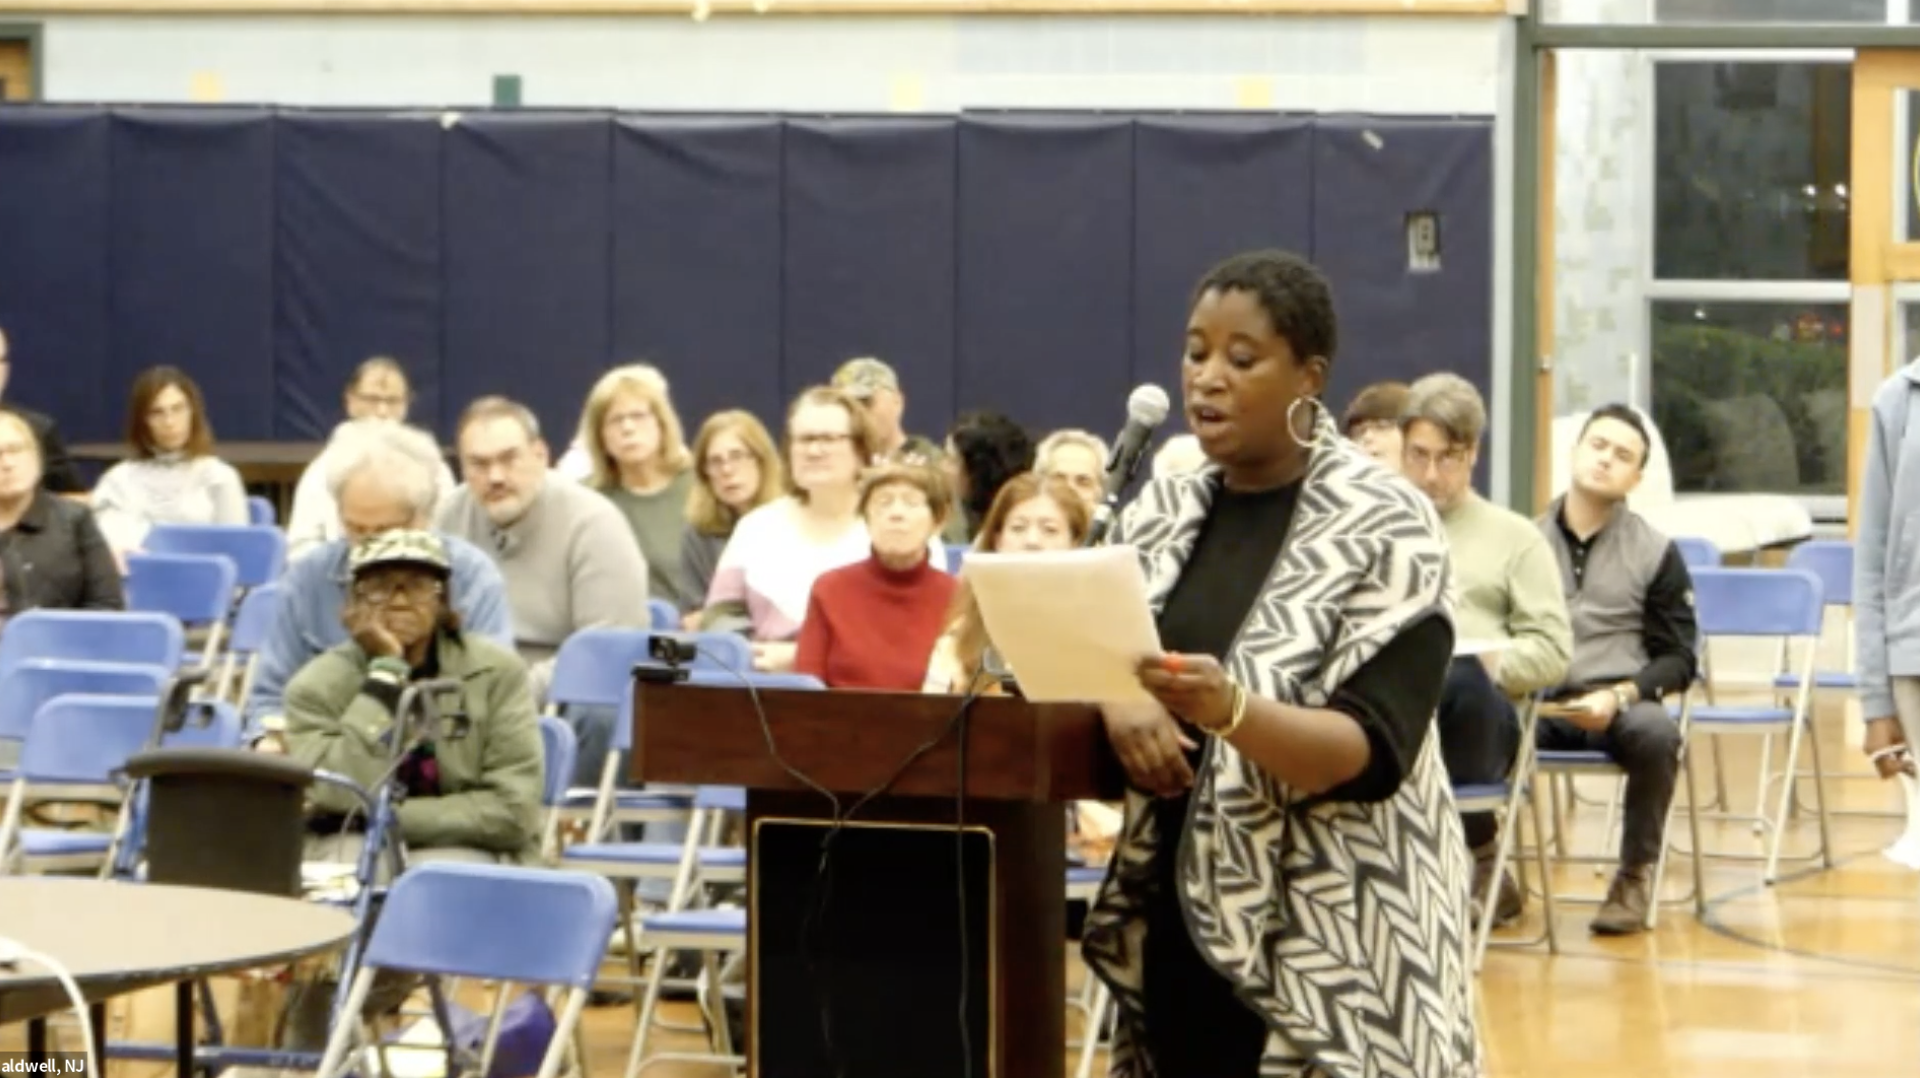 Monique Joseph speaks at the Caldwell Borough council meeting on Nov. 1, 2022.